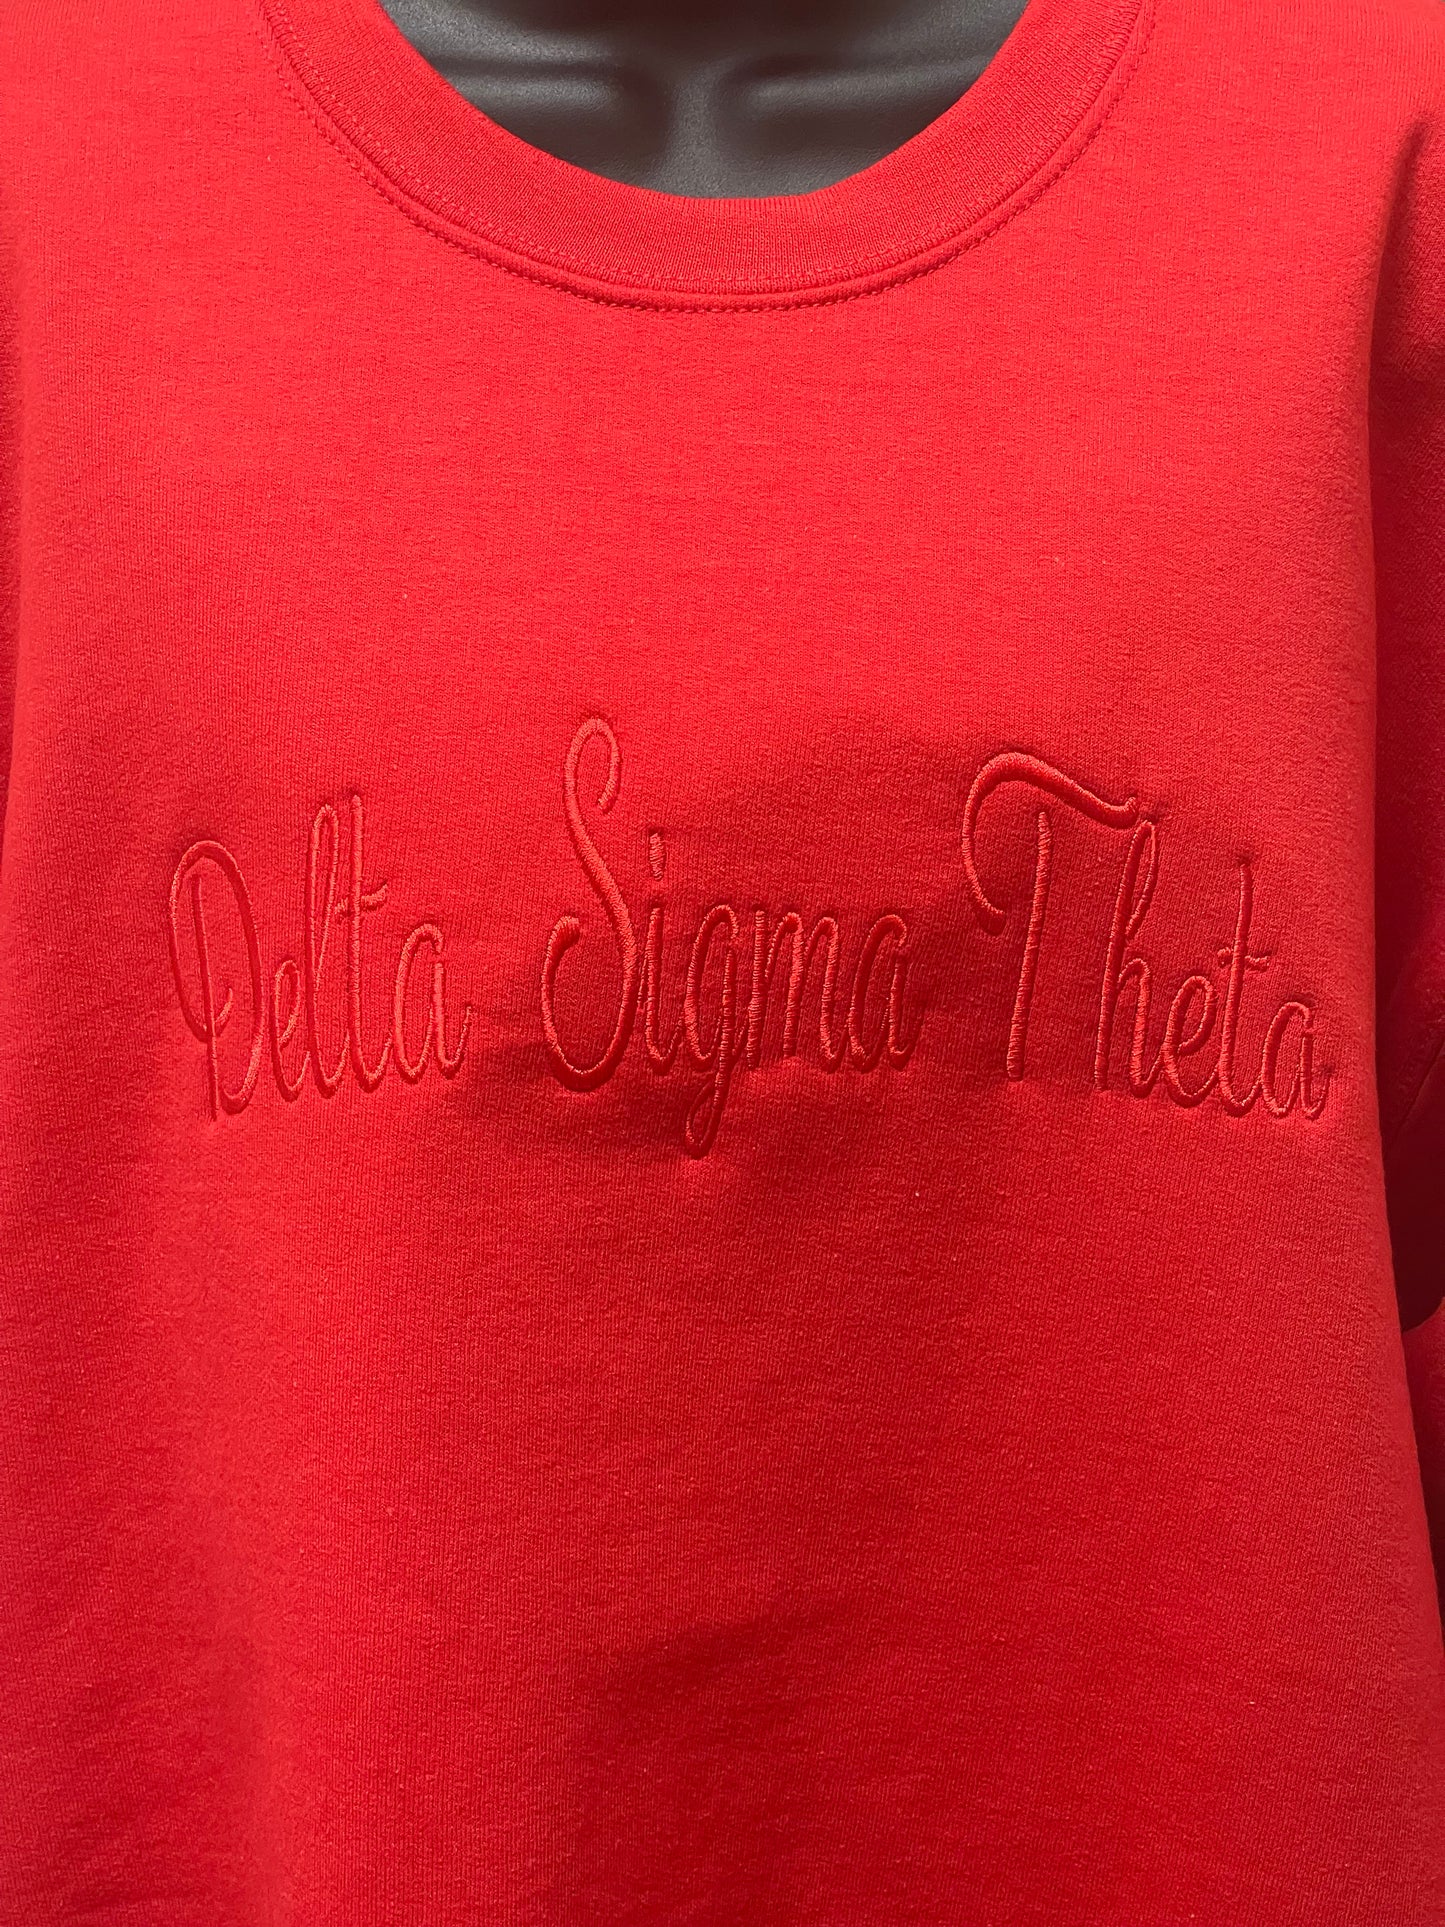 Delta Sigma Theta Sweatshirt